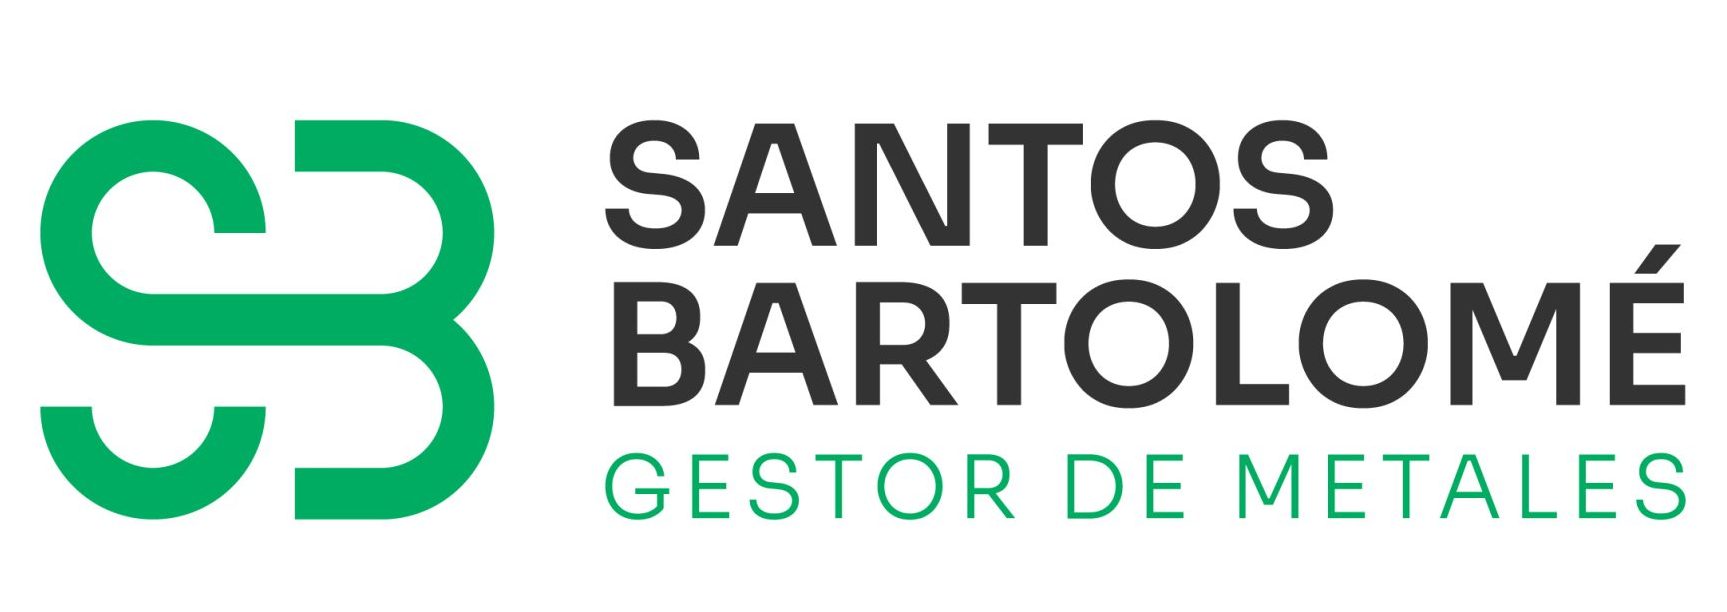 Chatarrería Santos Bartolomé